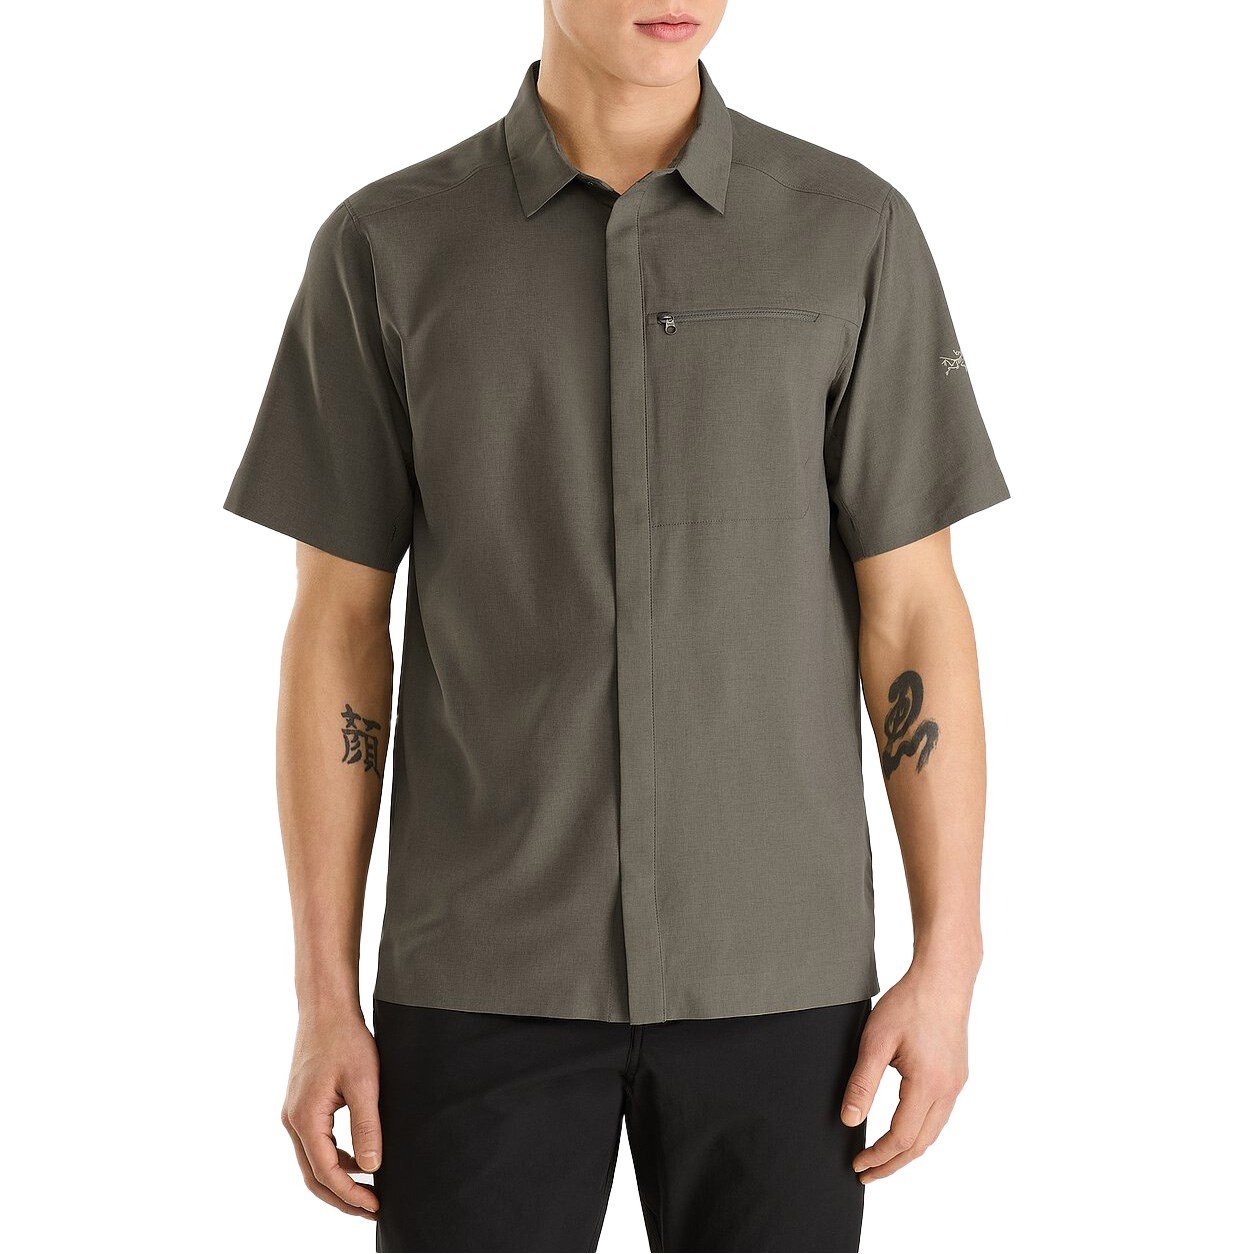 Arc'teryx Skyline Short-Sleeve-Melange Shirt